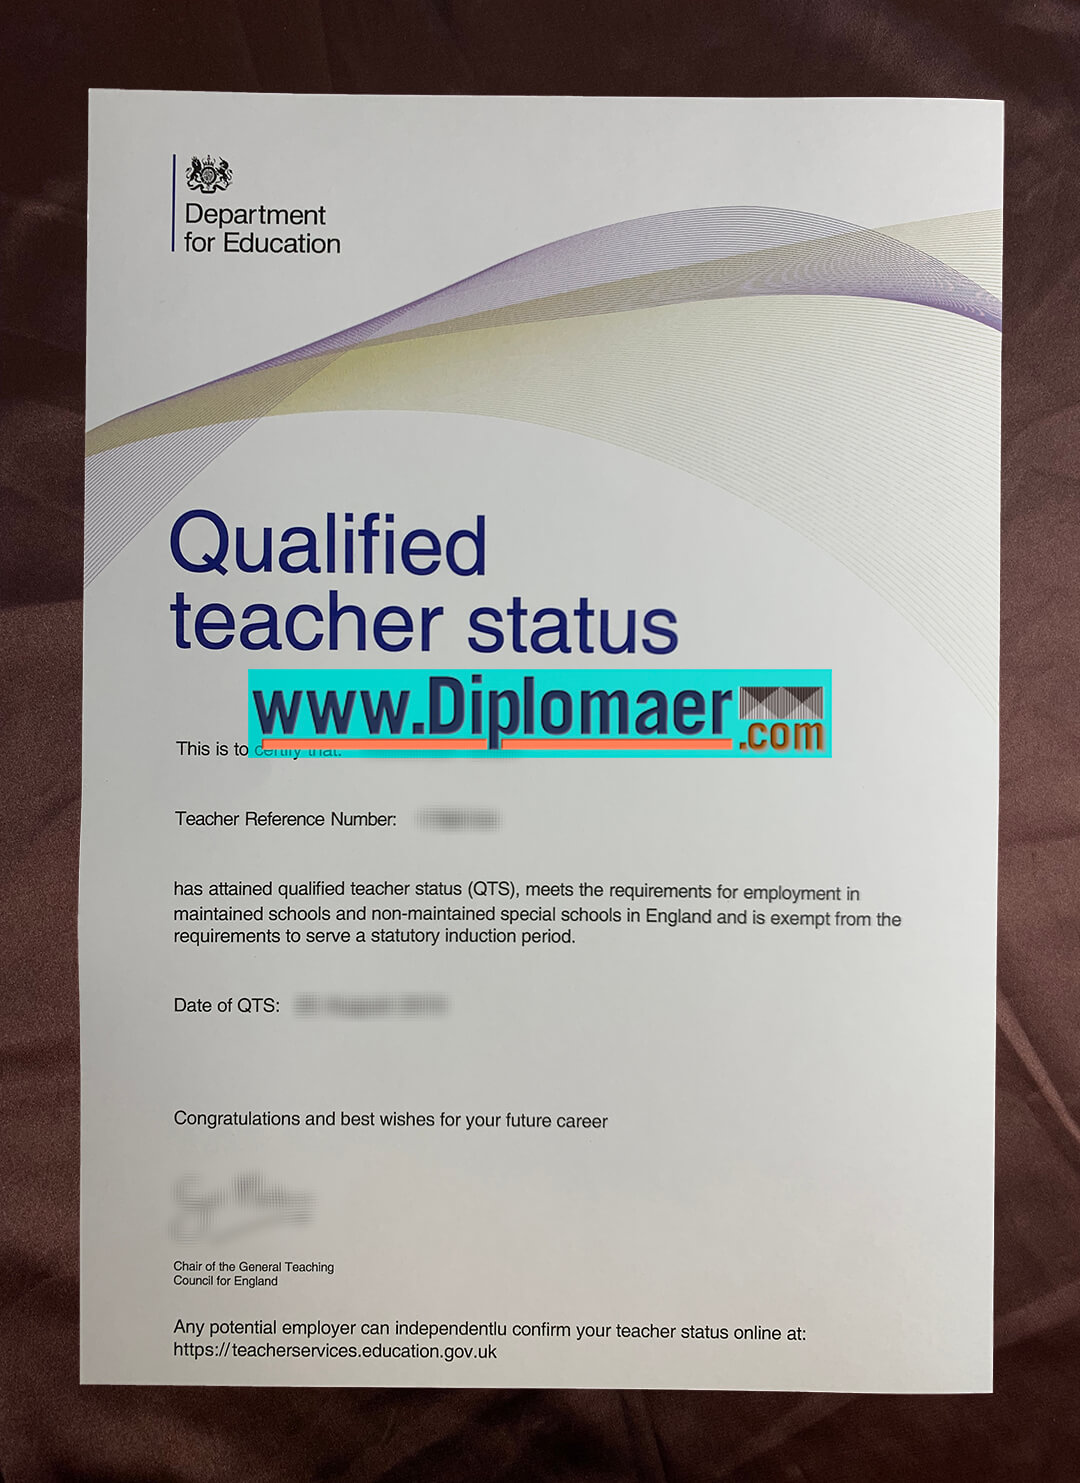 Qualified teacher status fake certificate - What is the cost of a Qualified teacher status certificate?